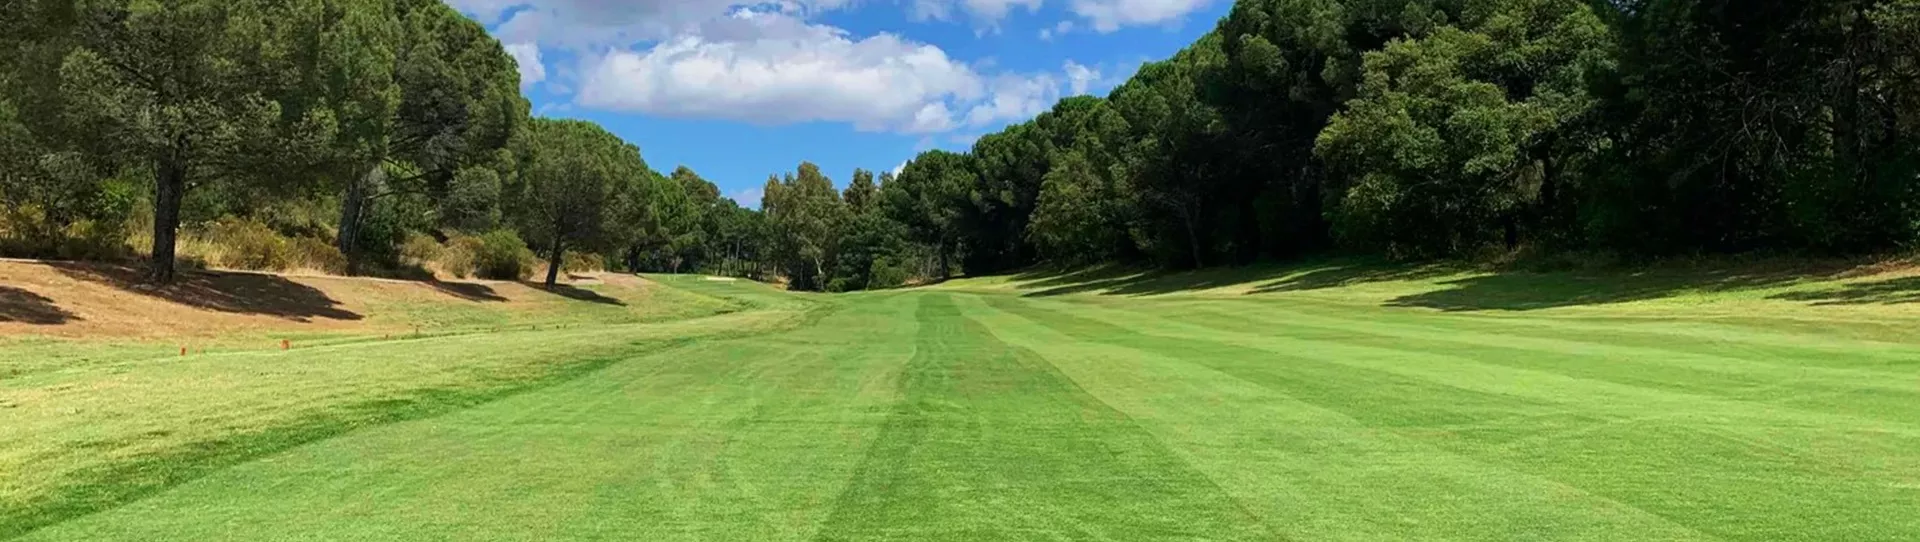 Spain golf courses - Real Club de Campo de Cordoba - Photo 2